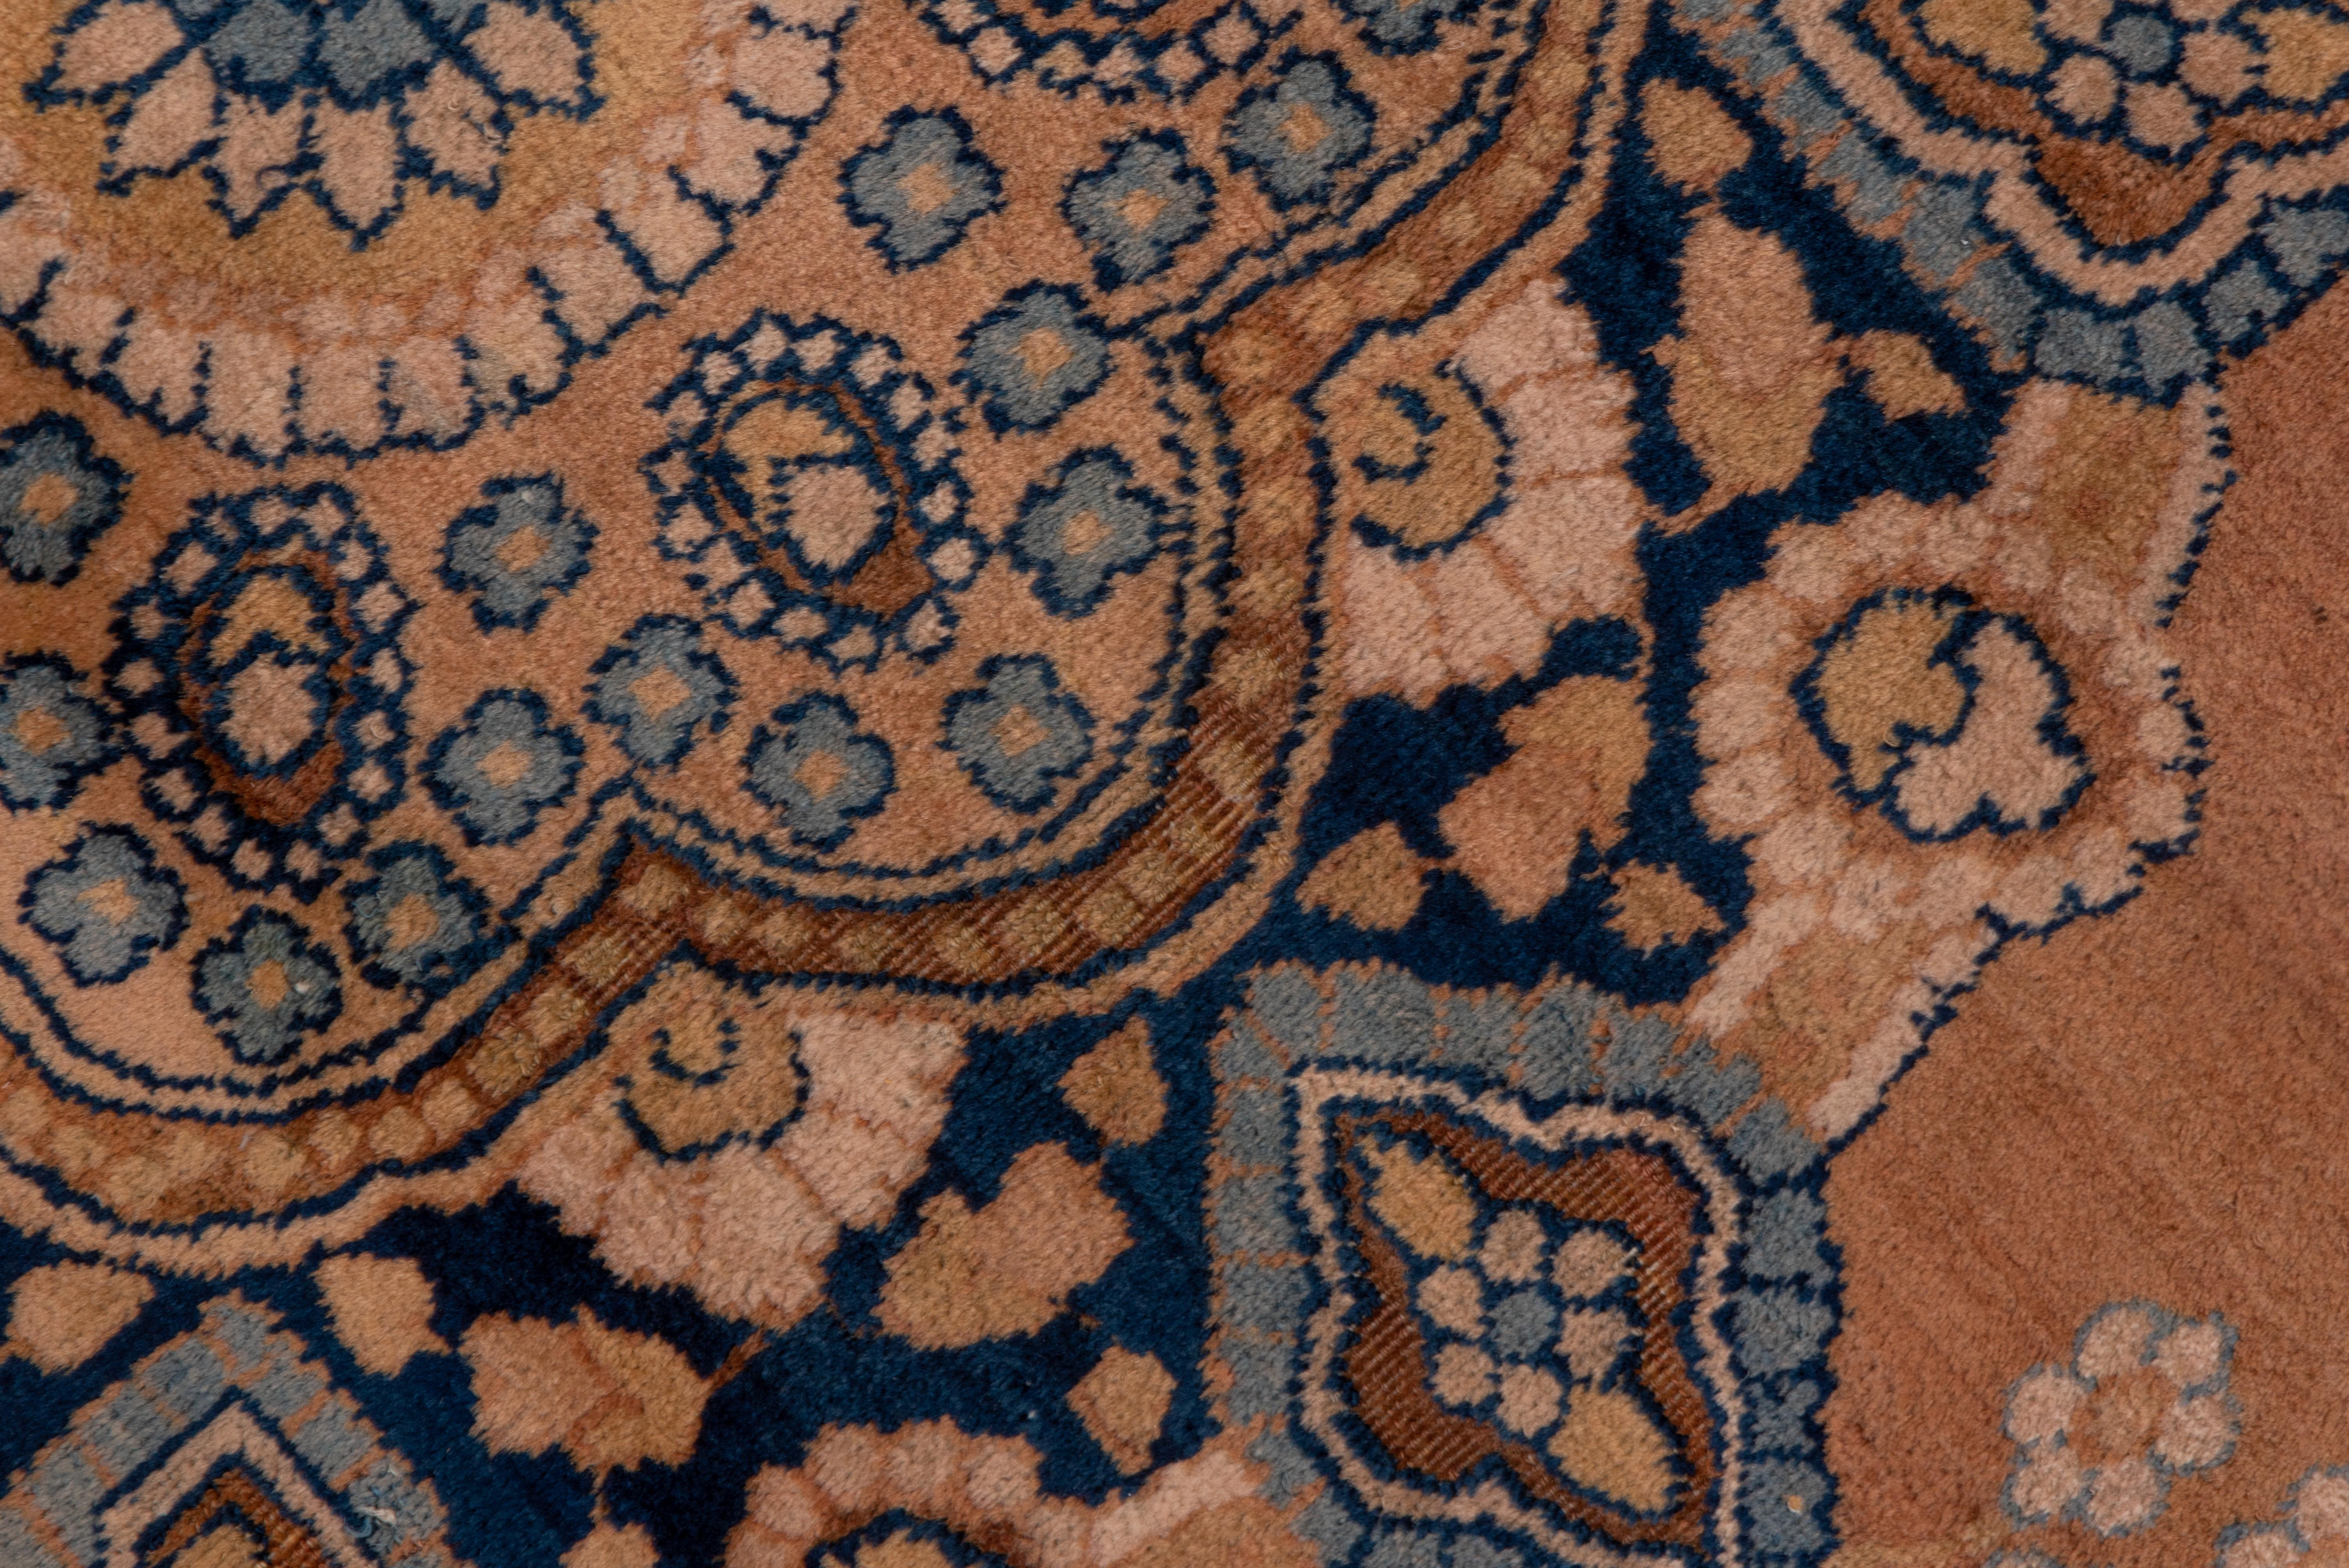 Wool Antique Persian Kerman Rug, Soft Orange Field, Blue Accents